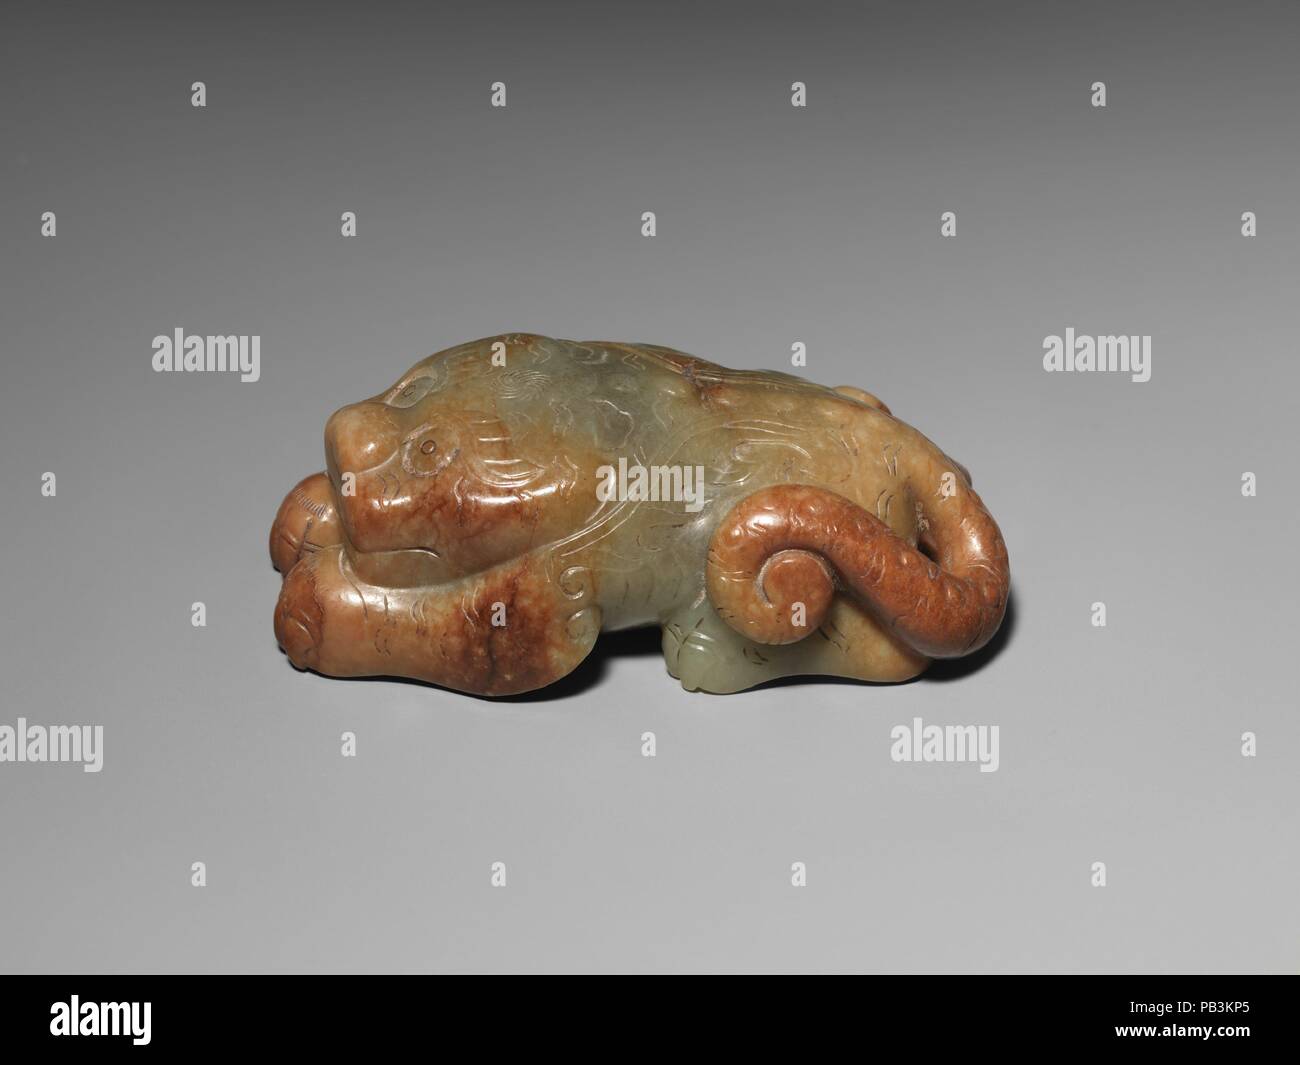 Cane in posizione supina. Cultura: la Cina. Dimensioni: L. 3 9/16 in. (9 cm); W. 1 15/16 in. (5 cm). Museo: Metropolitan Museum of Art di New York, Stati Uniti d'America. Foto Stock